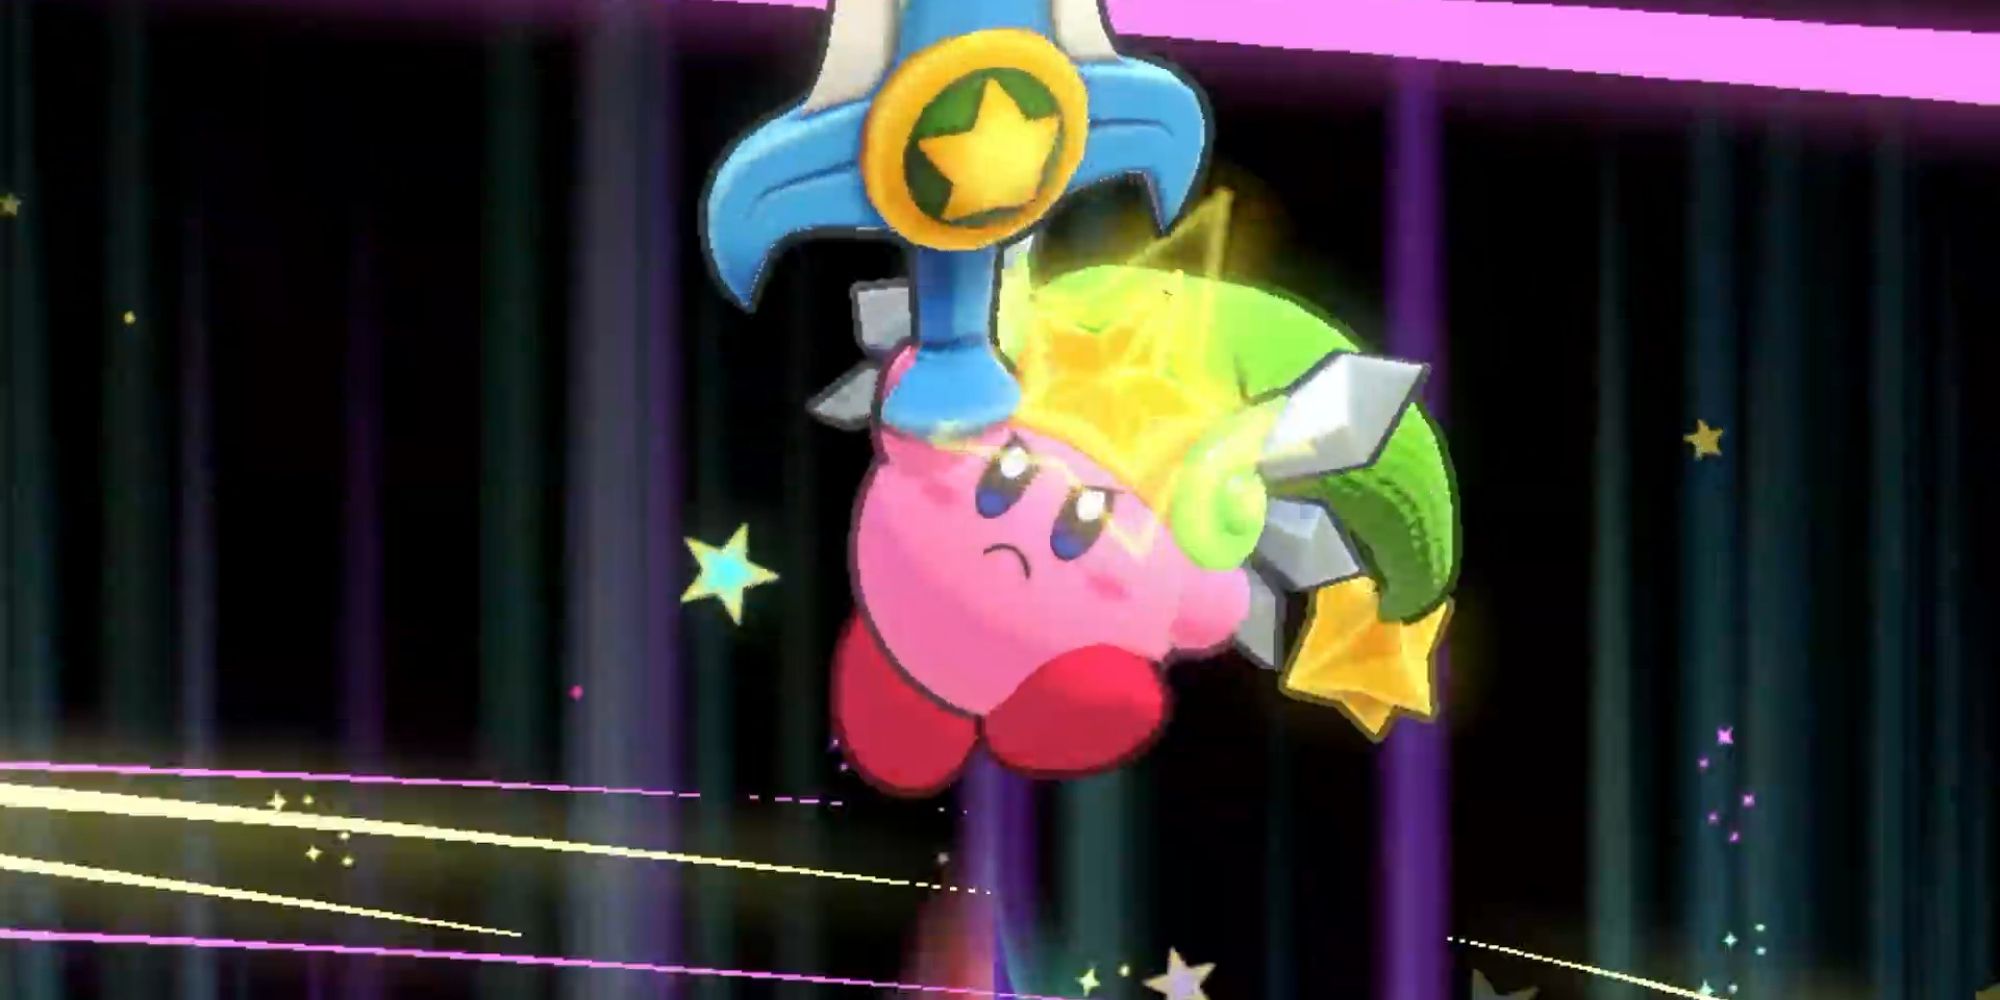 Kirby wielding a sword in Return to Dreamland